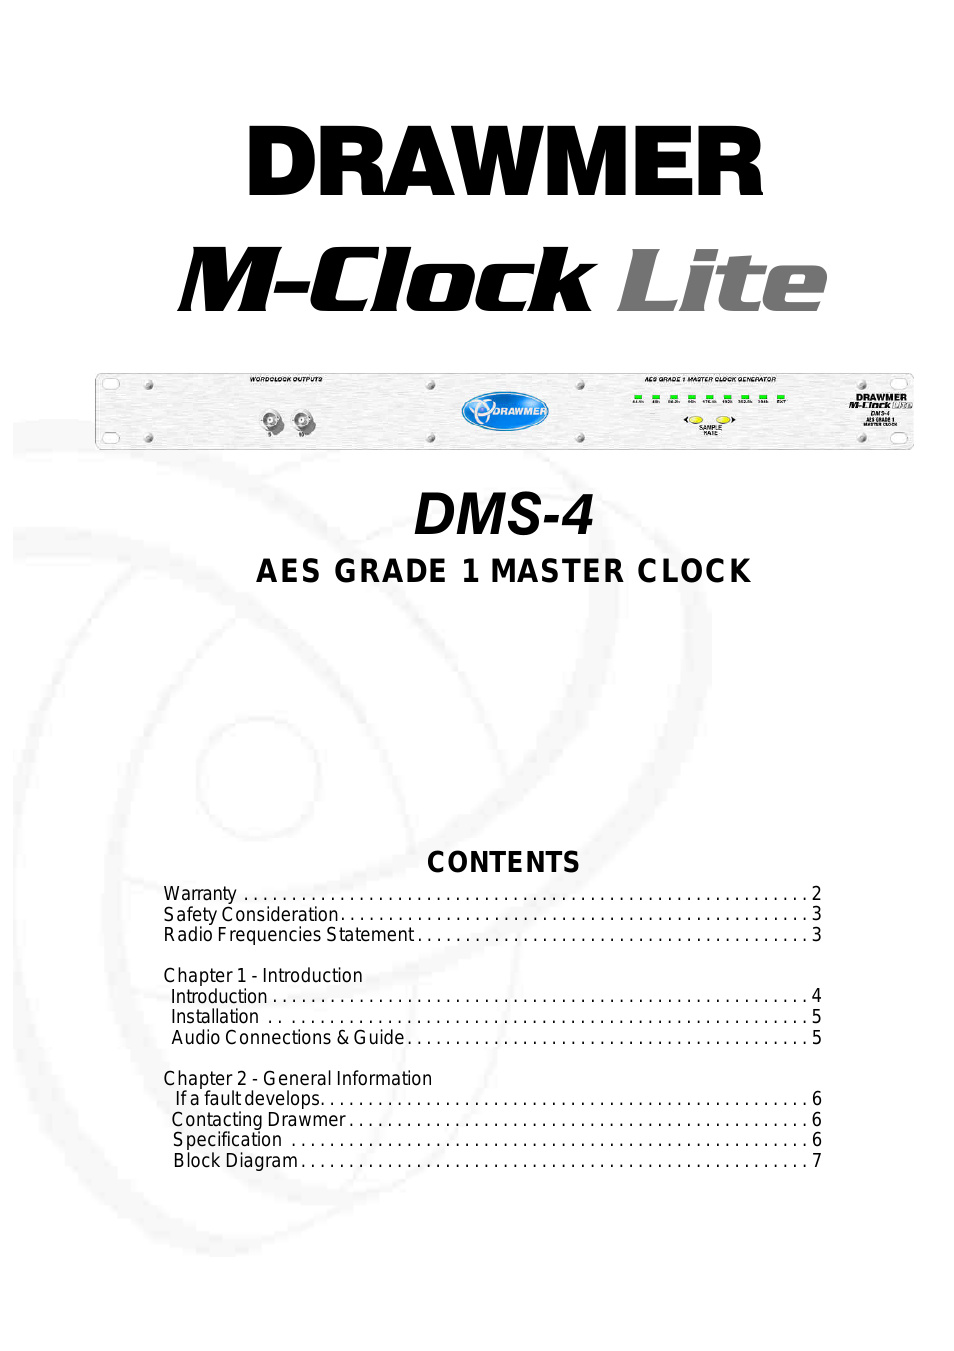 DMS-4 M-Clock Lite AES Grade 1 Master Clock